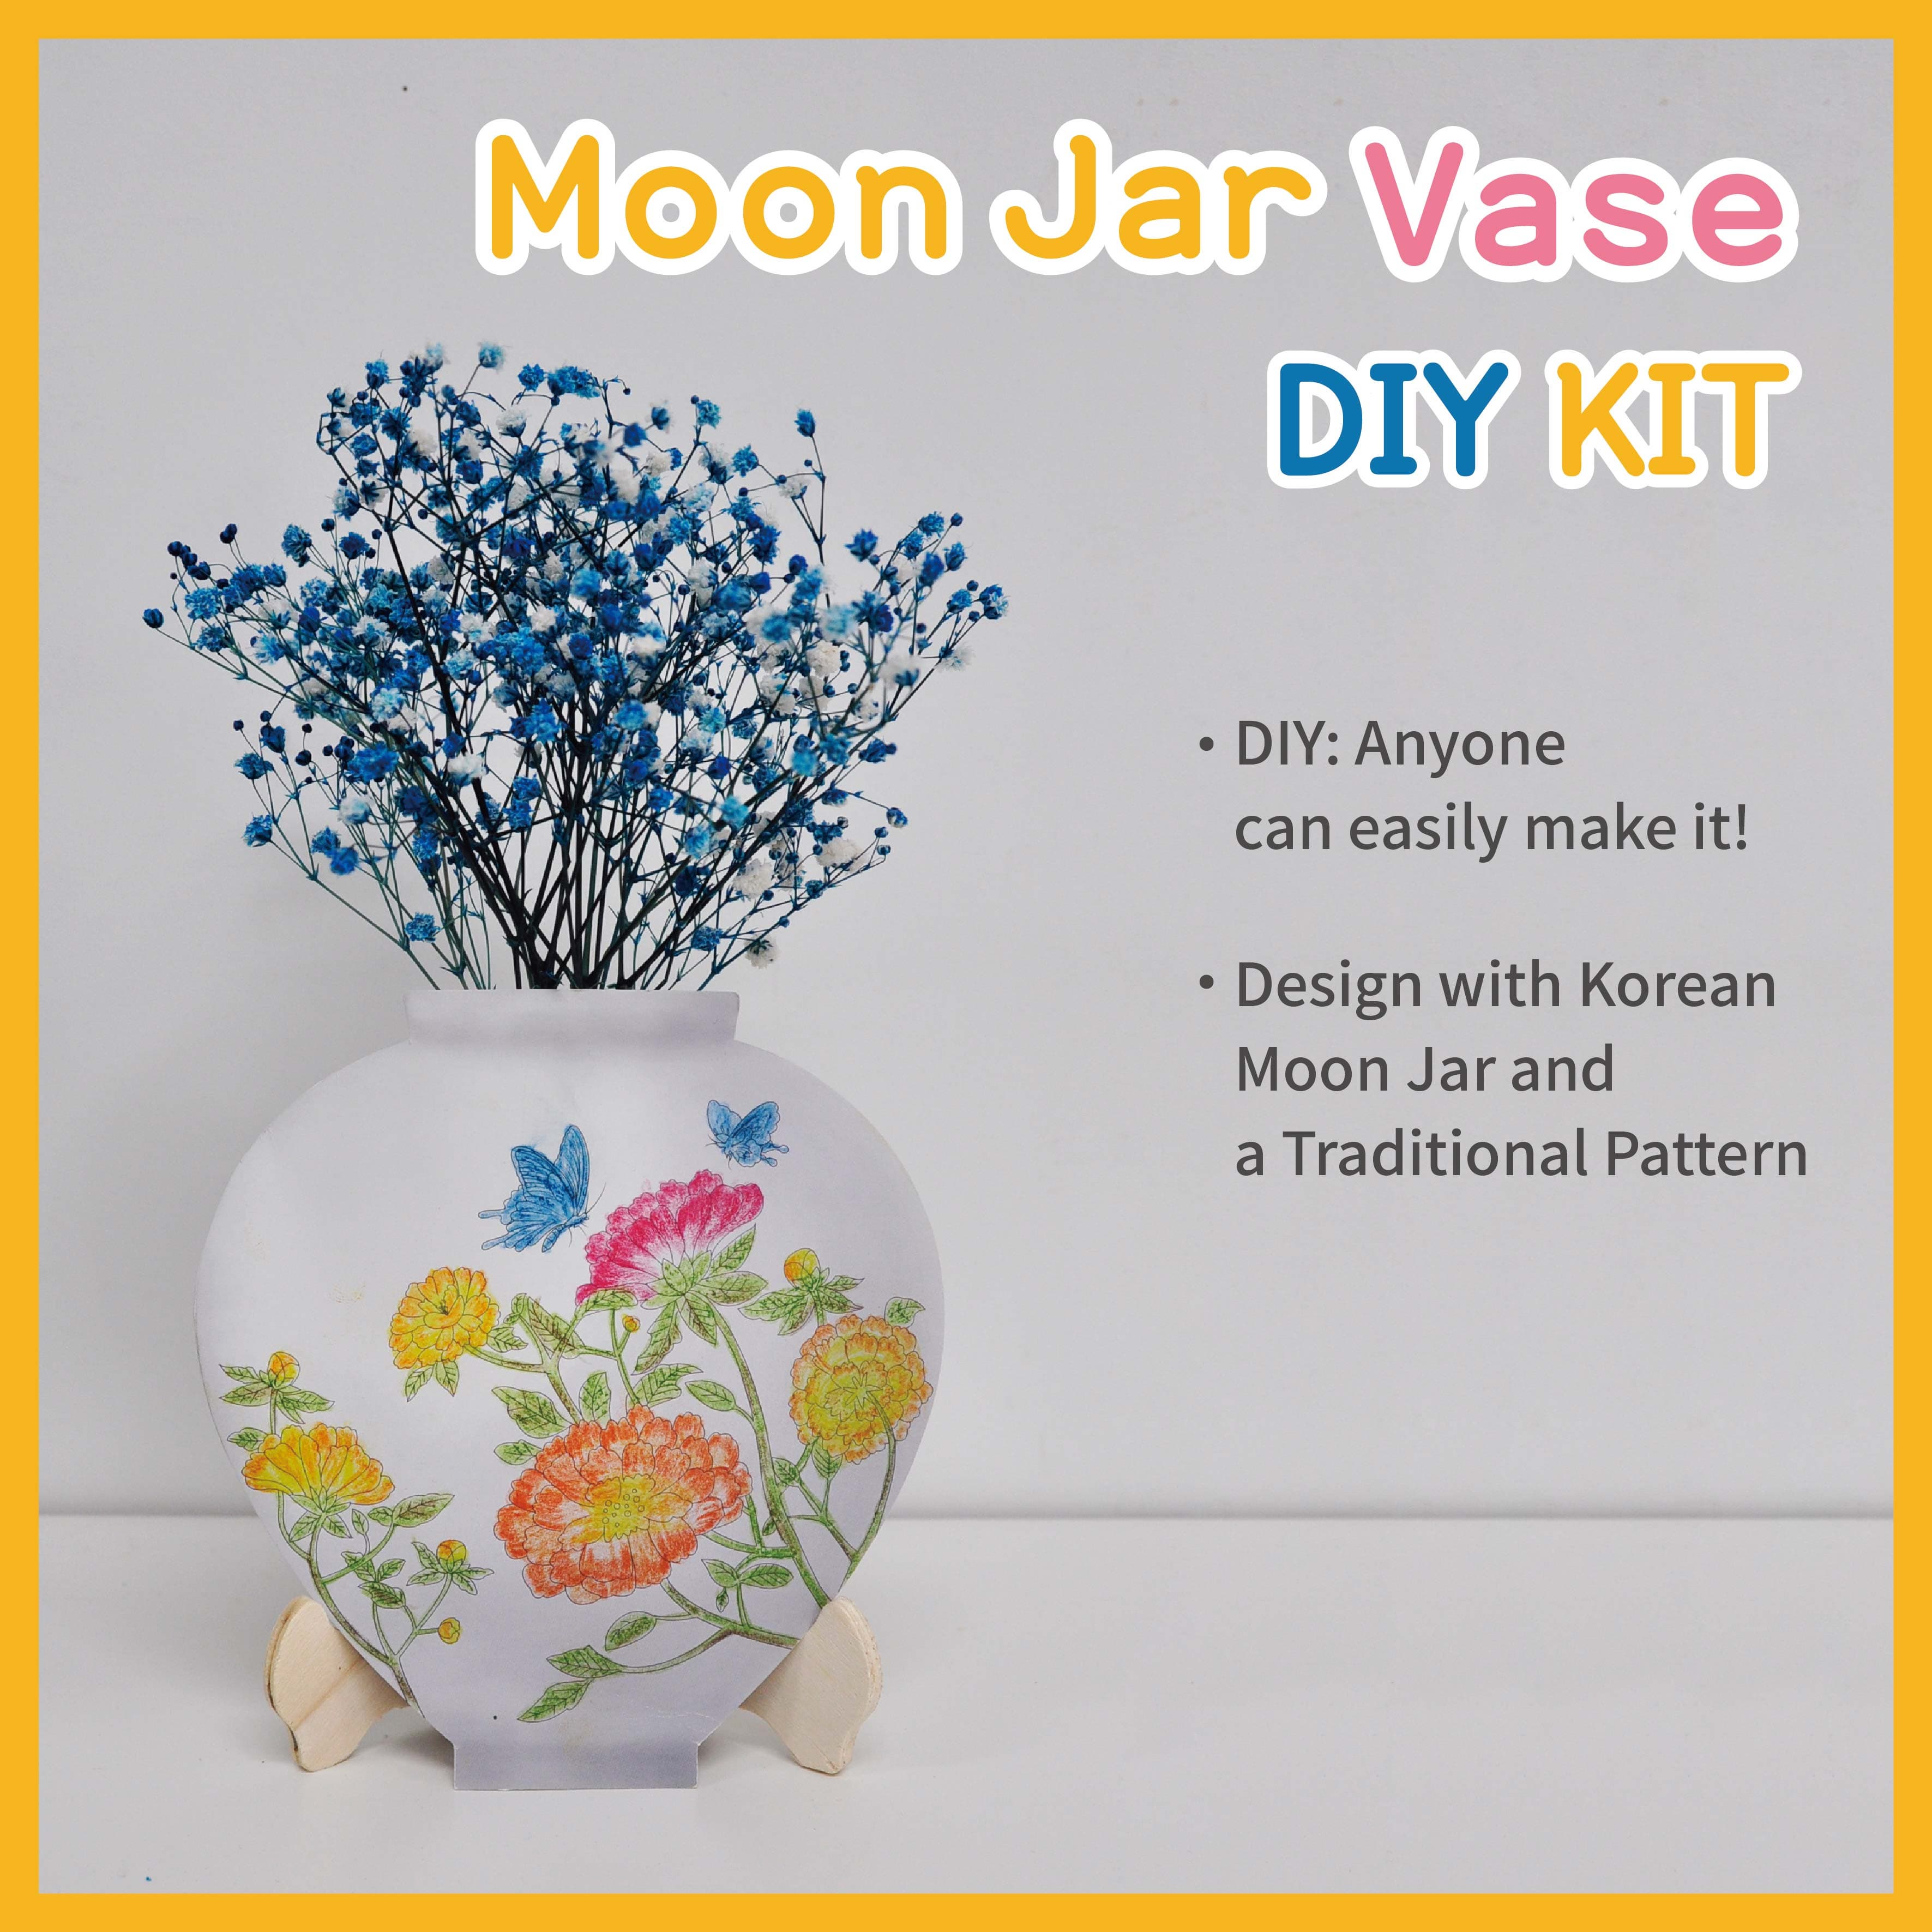 _Moon Jar Vase_ DIY KIT